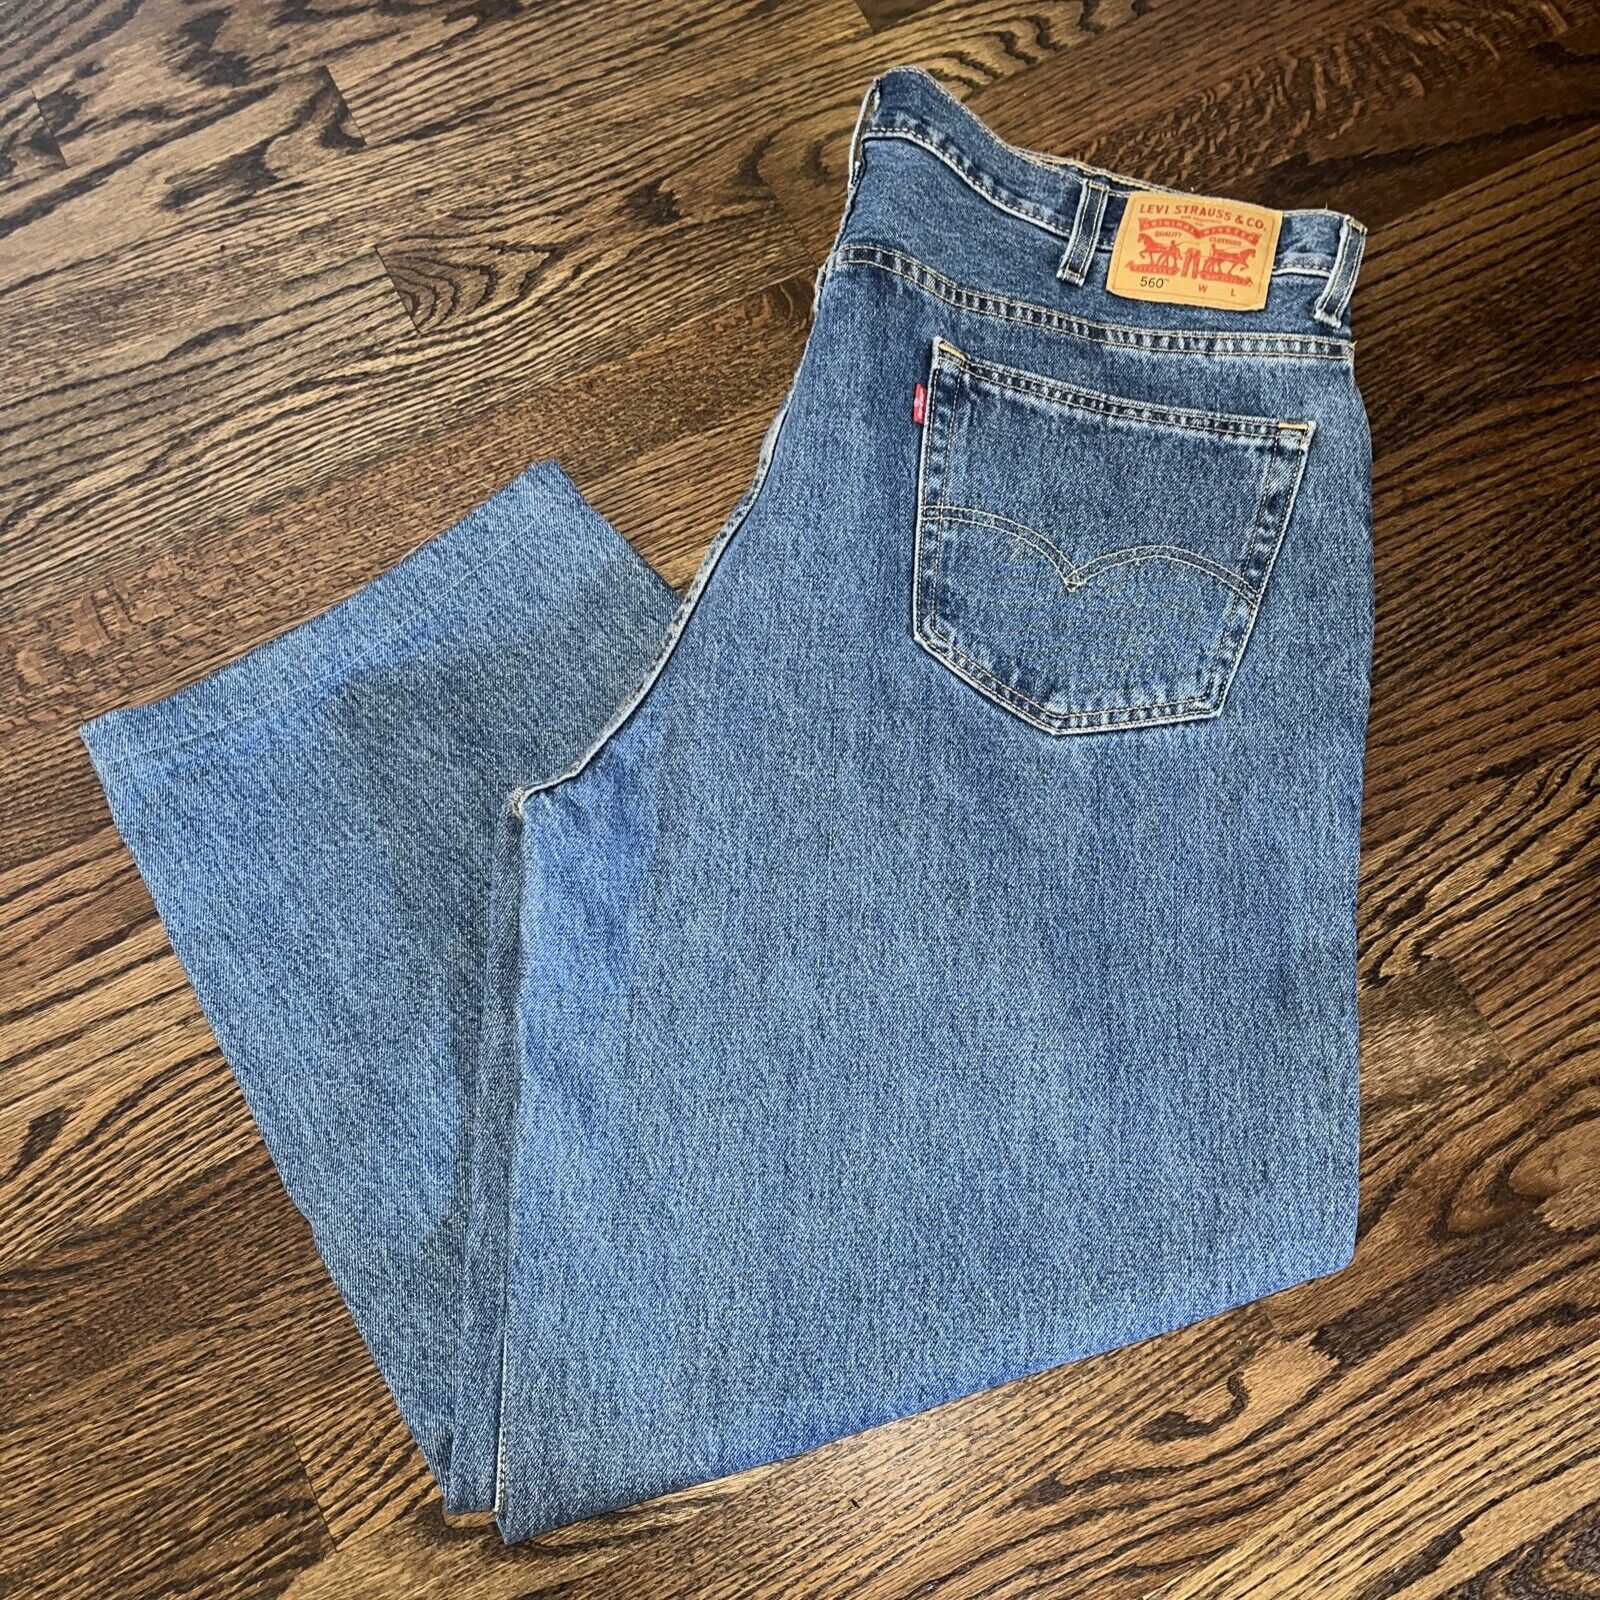 Levi's 560 Comfort Fit Denim Blue Jeans 42 x 27 Altered Hem 39307686204 |  eBay